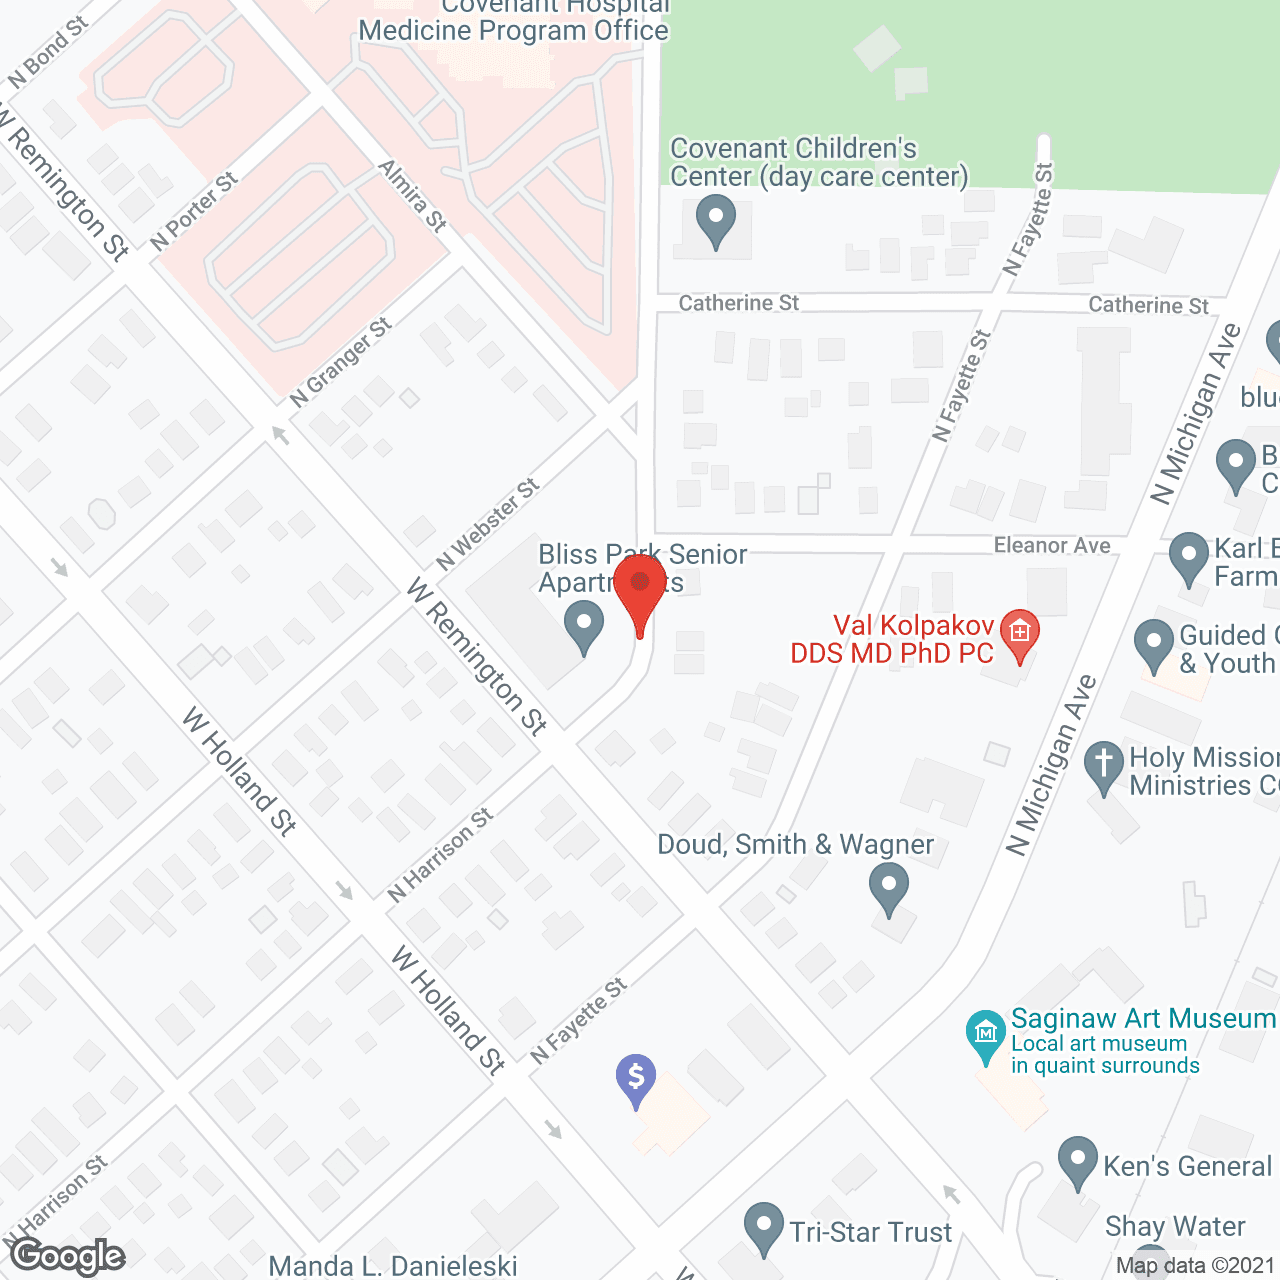 Bliss Park Senior Apartments in google map